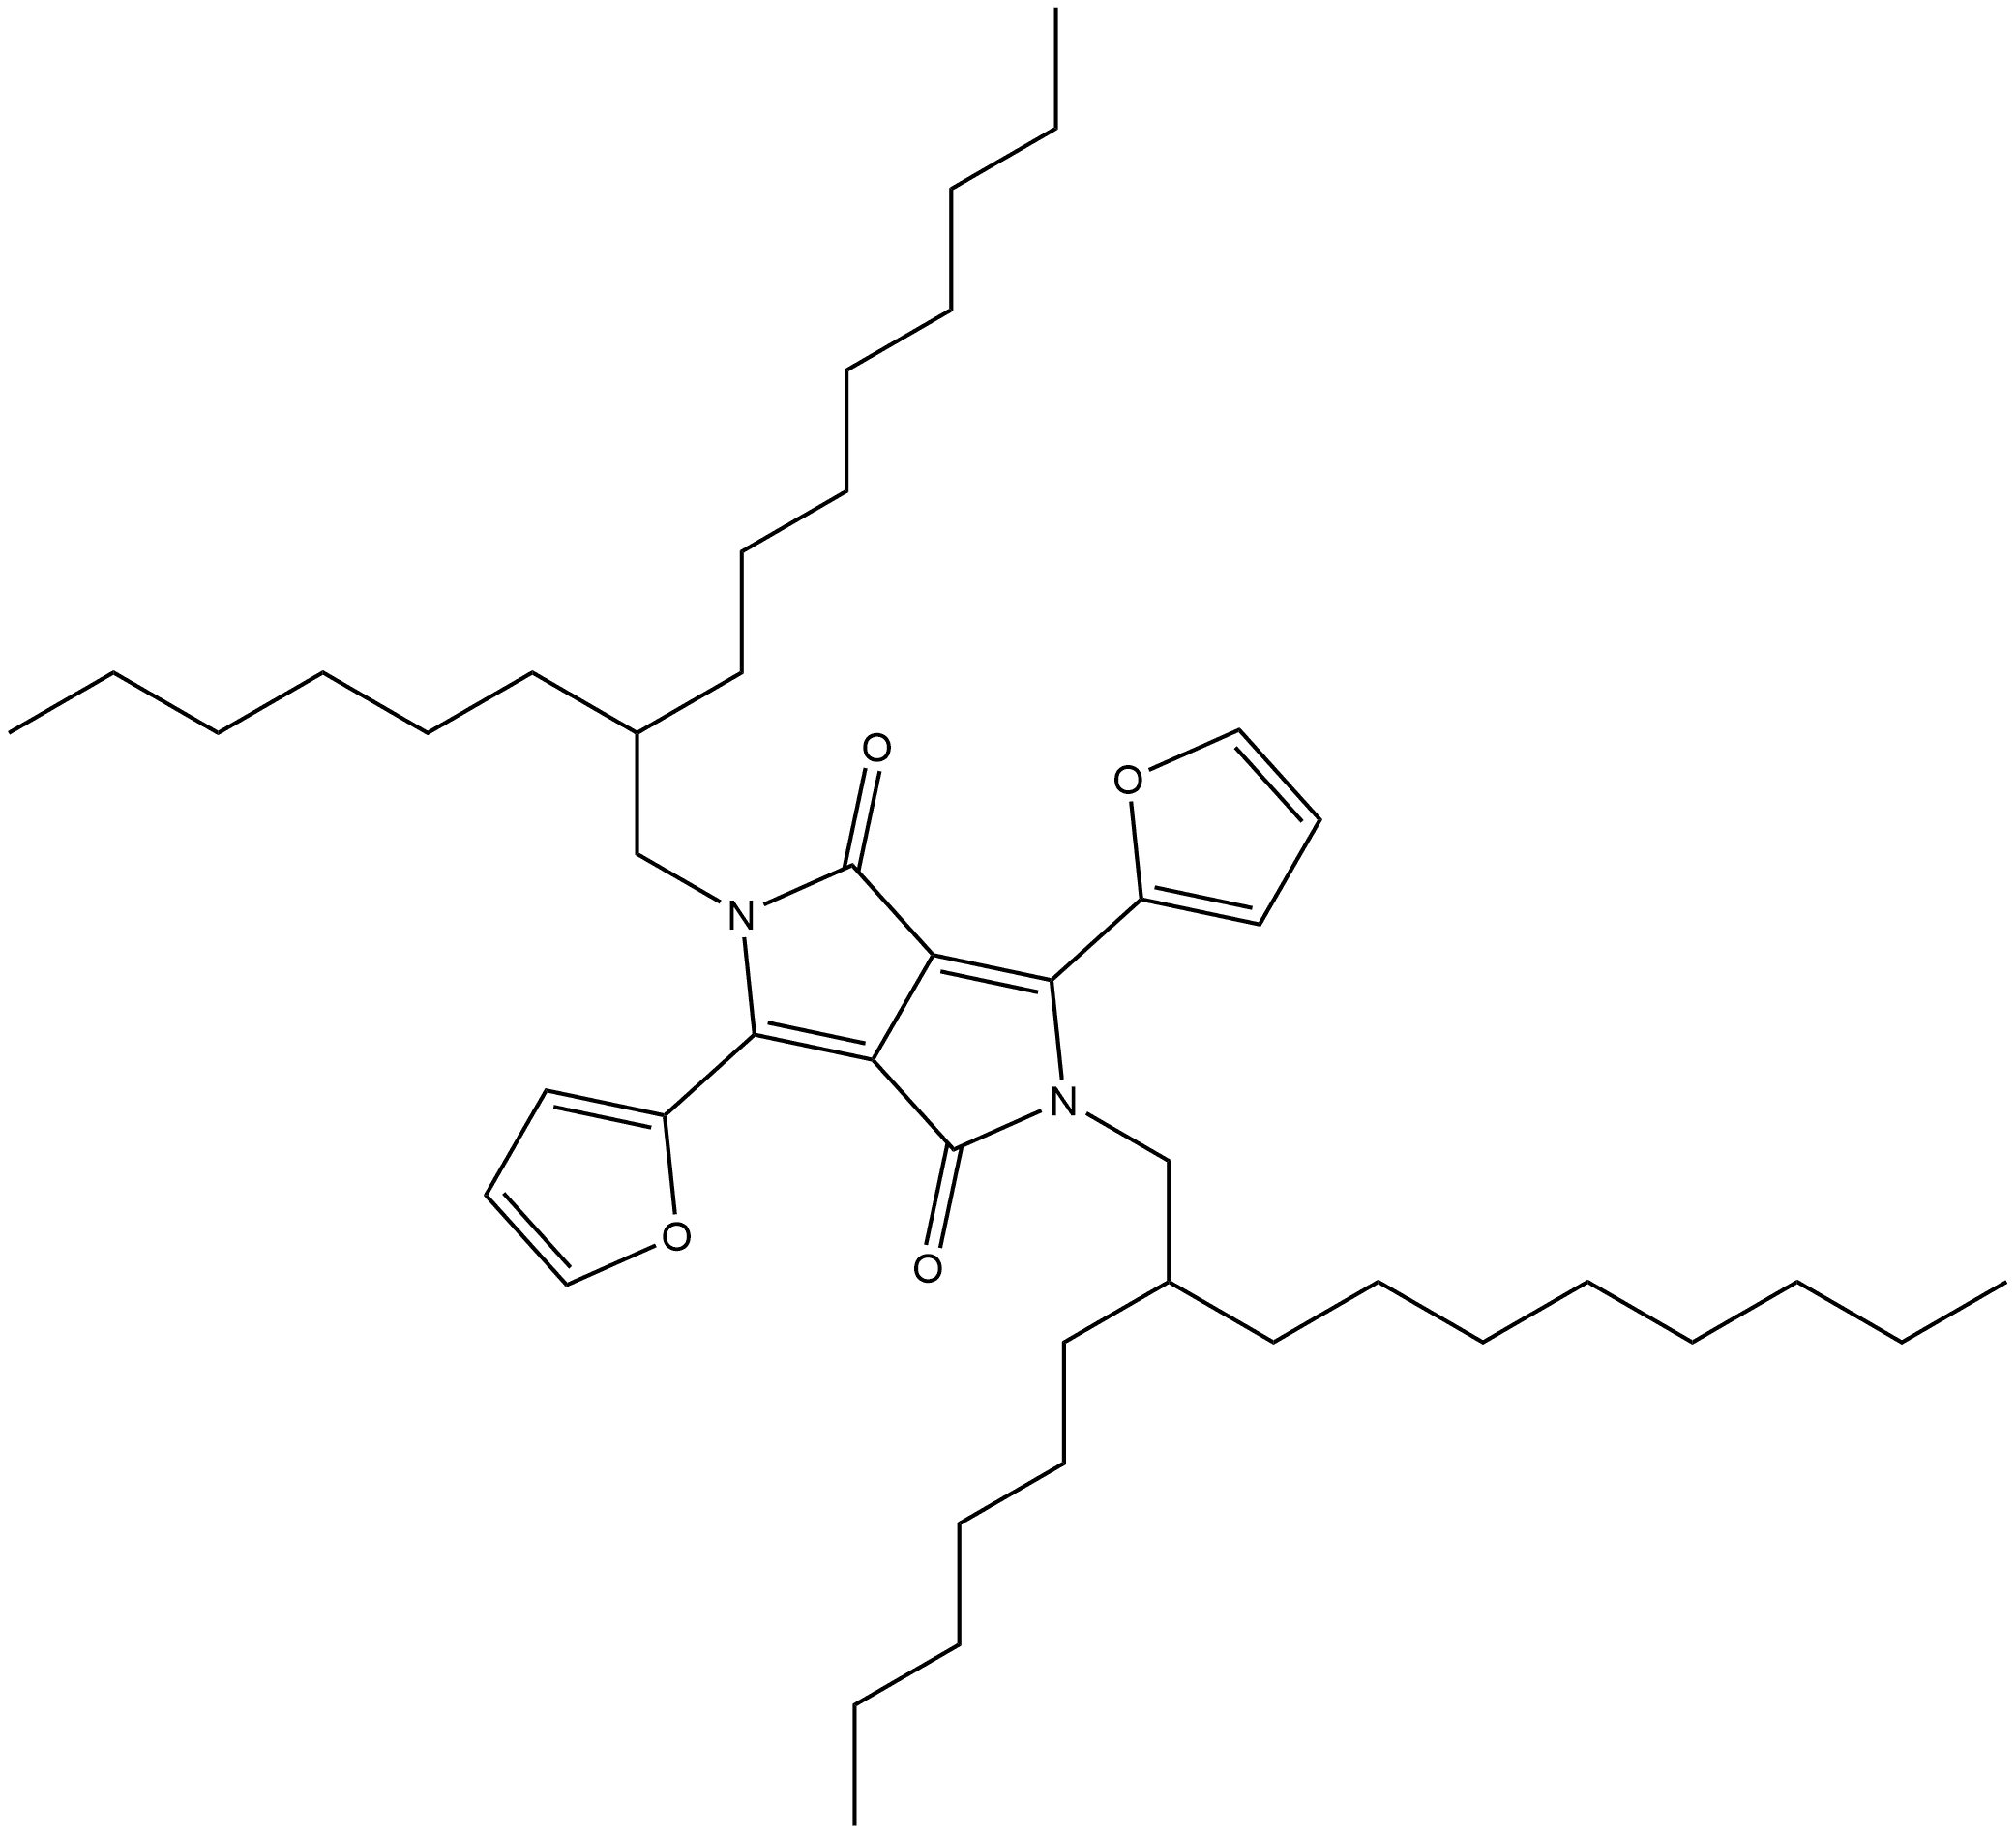 3,6-bis(furan-2-yl)-2,5-dihydro-2,5-bis(2-hexyldecyl)pyrrolo[3,4-c]pyrrolo-1,4-dione Structure